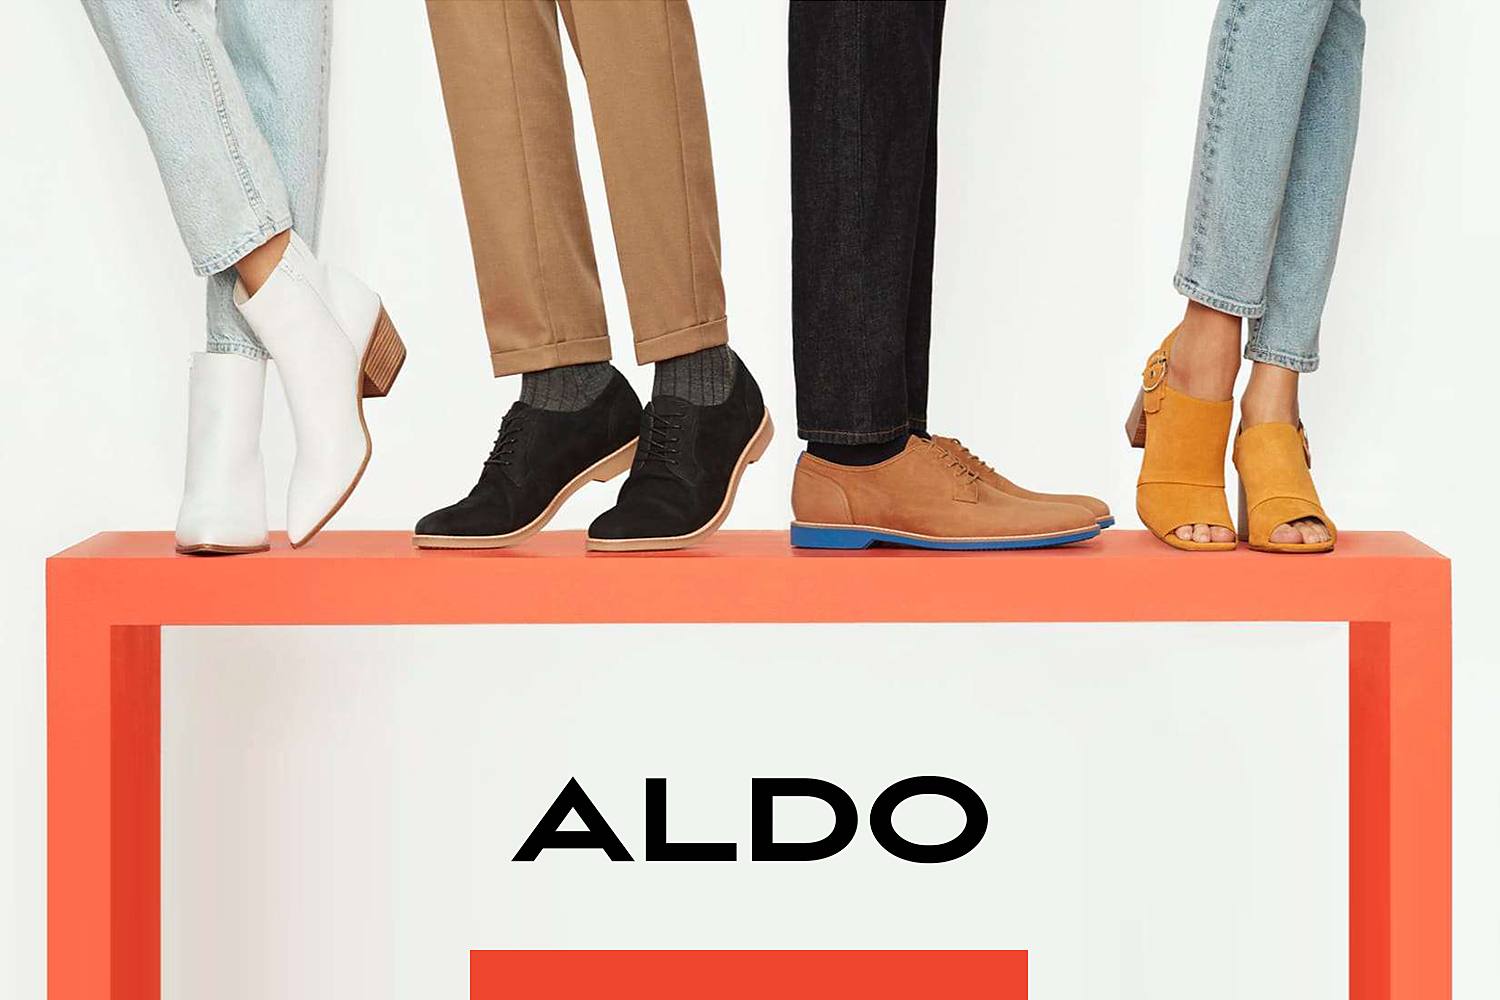 Aldo Shoes - Purses, Sandals & More | Sears.com